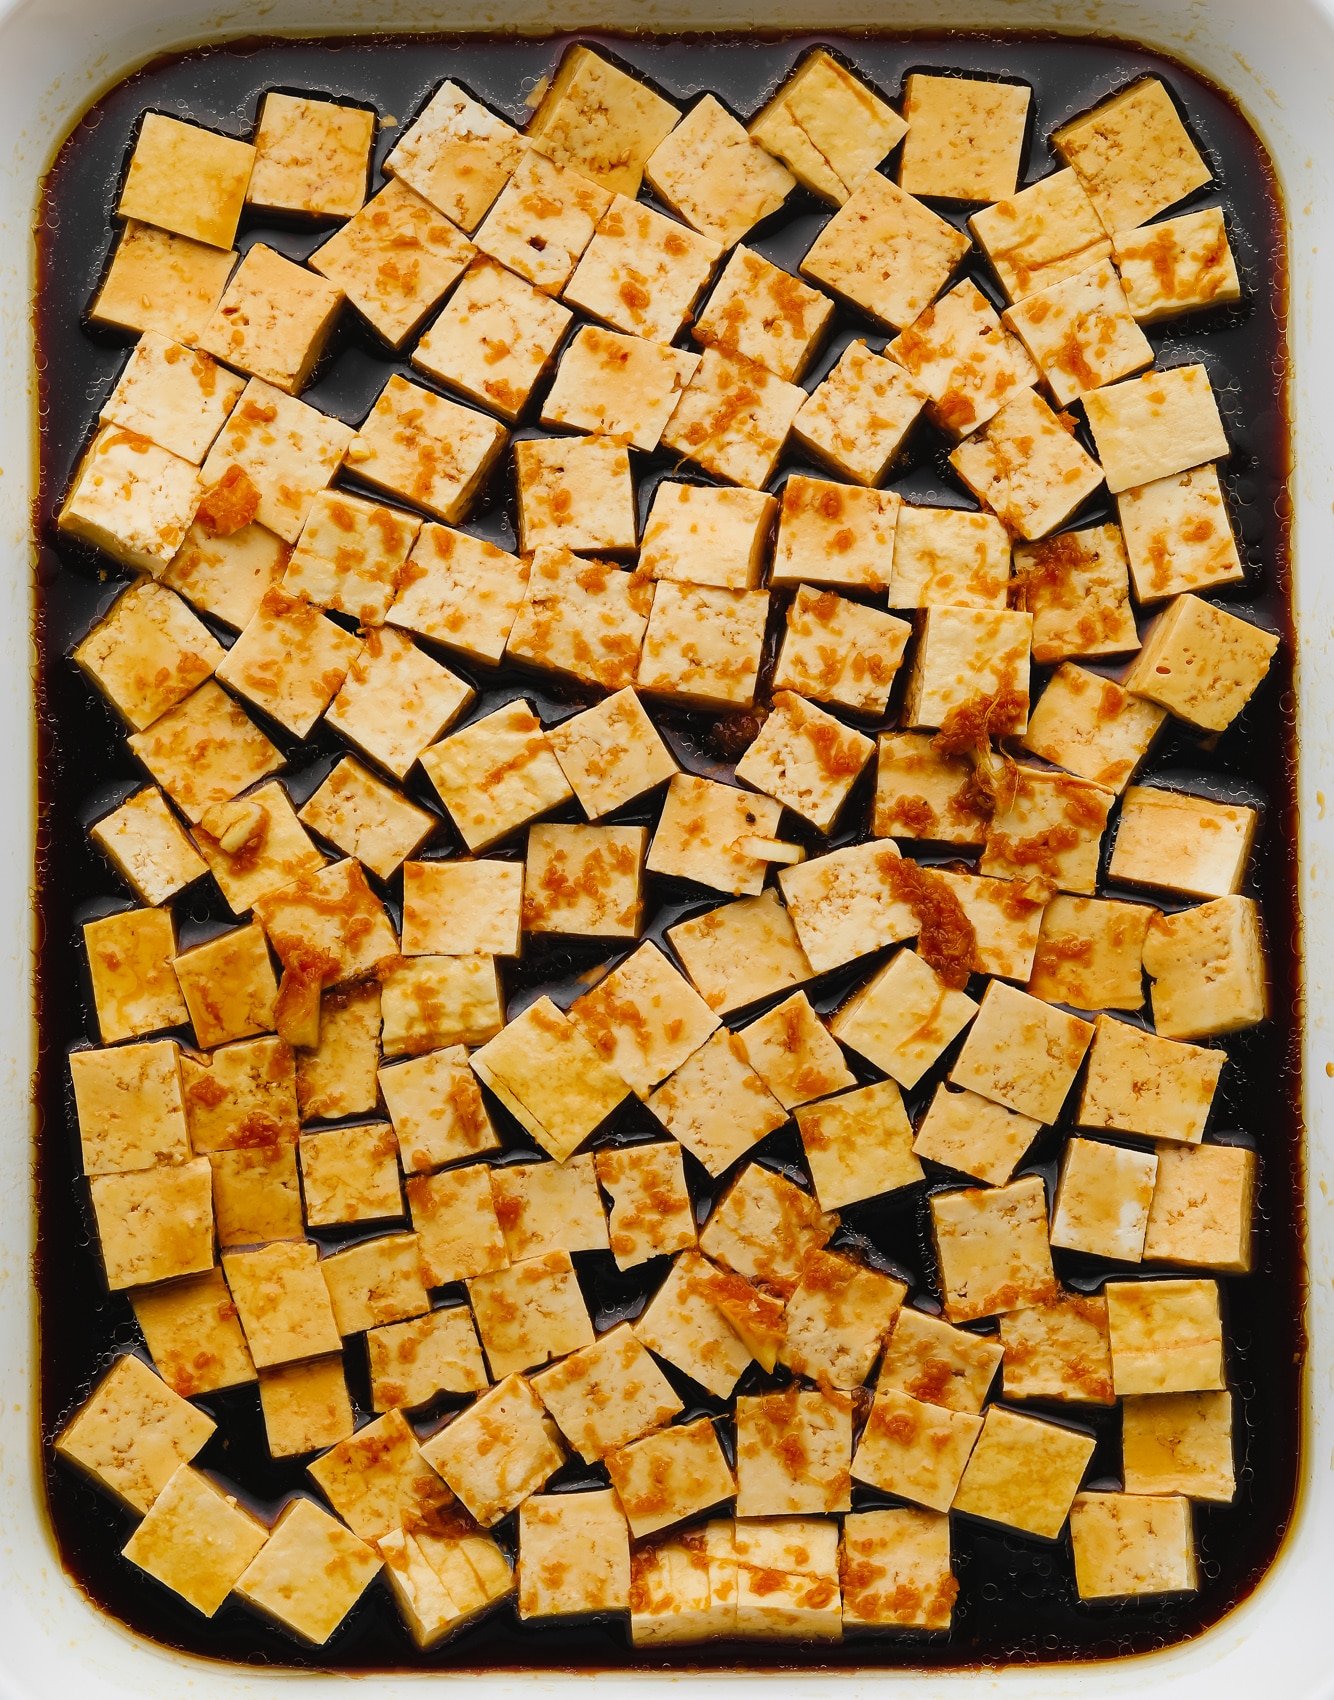 tofu cubes sitting in a dark brown marinade.